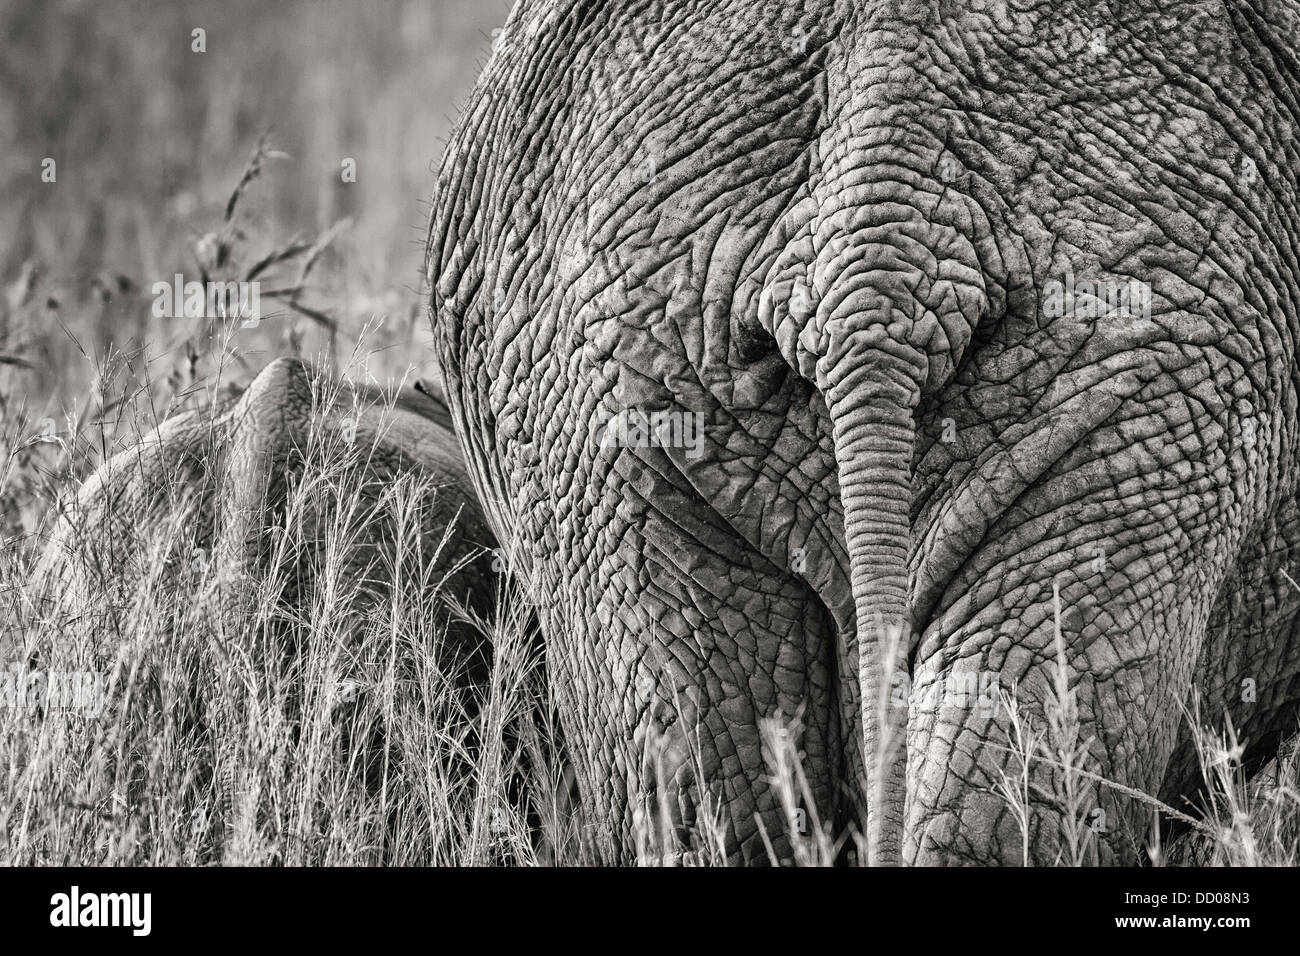 Monochrome detail of elephant mother and baby rear view close up walking through grass, Maasai Mara, Kenya Stock Photo